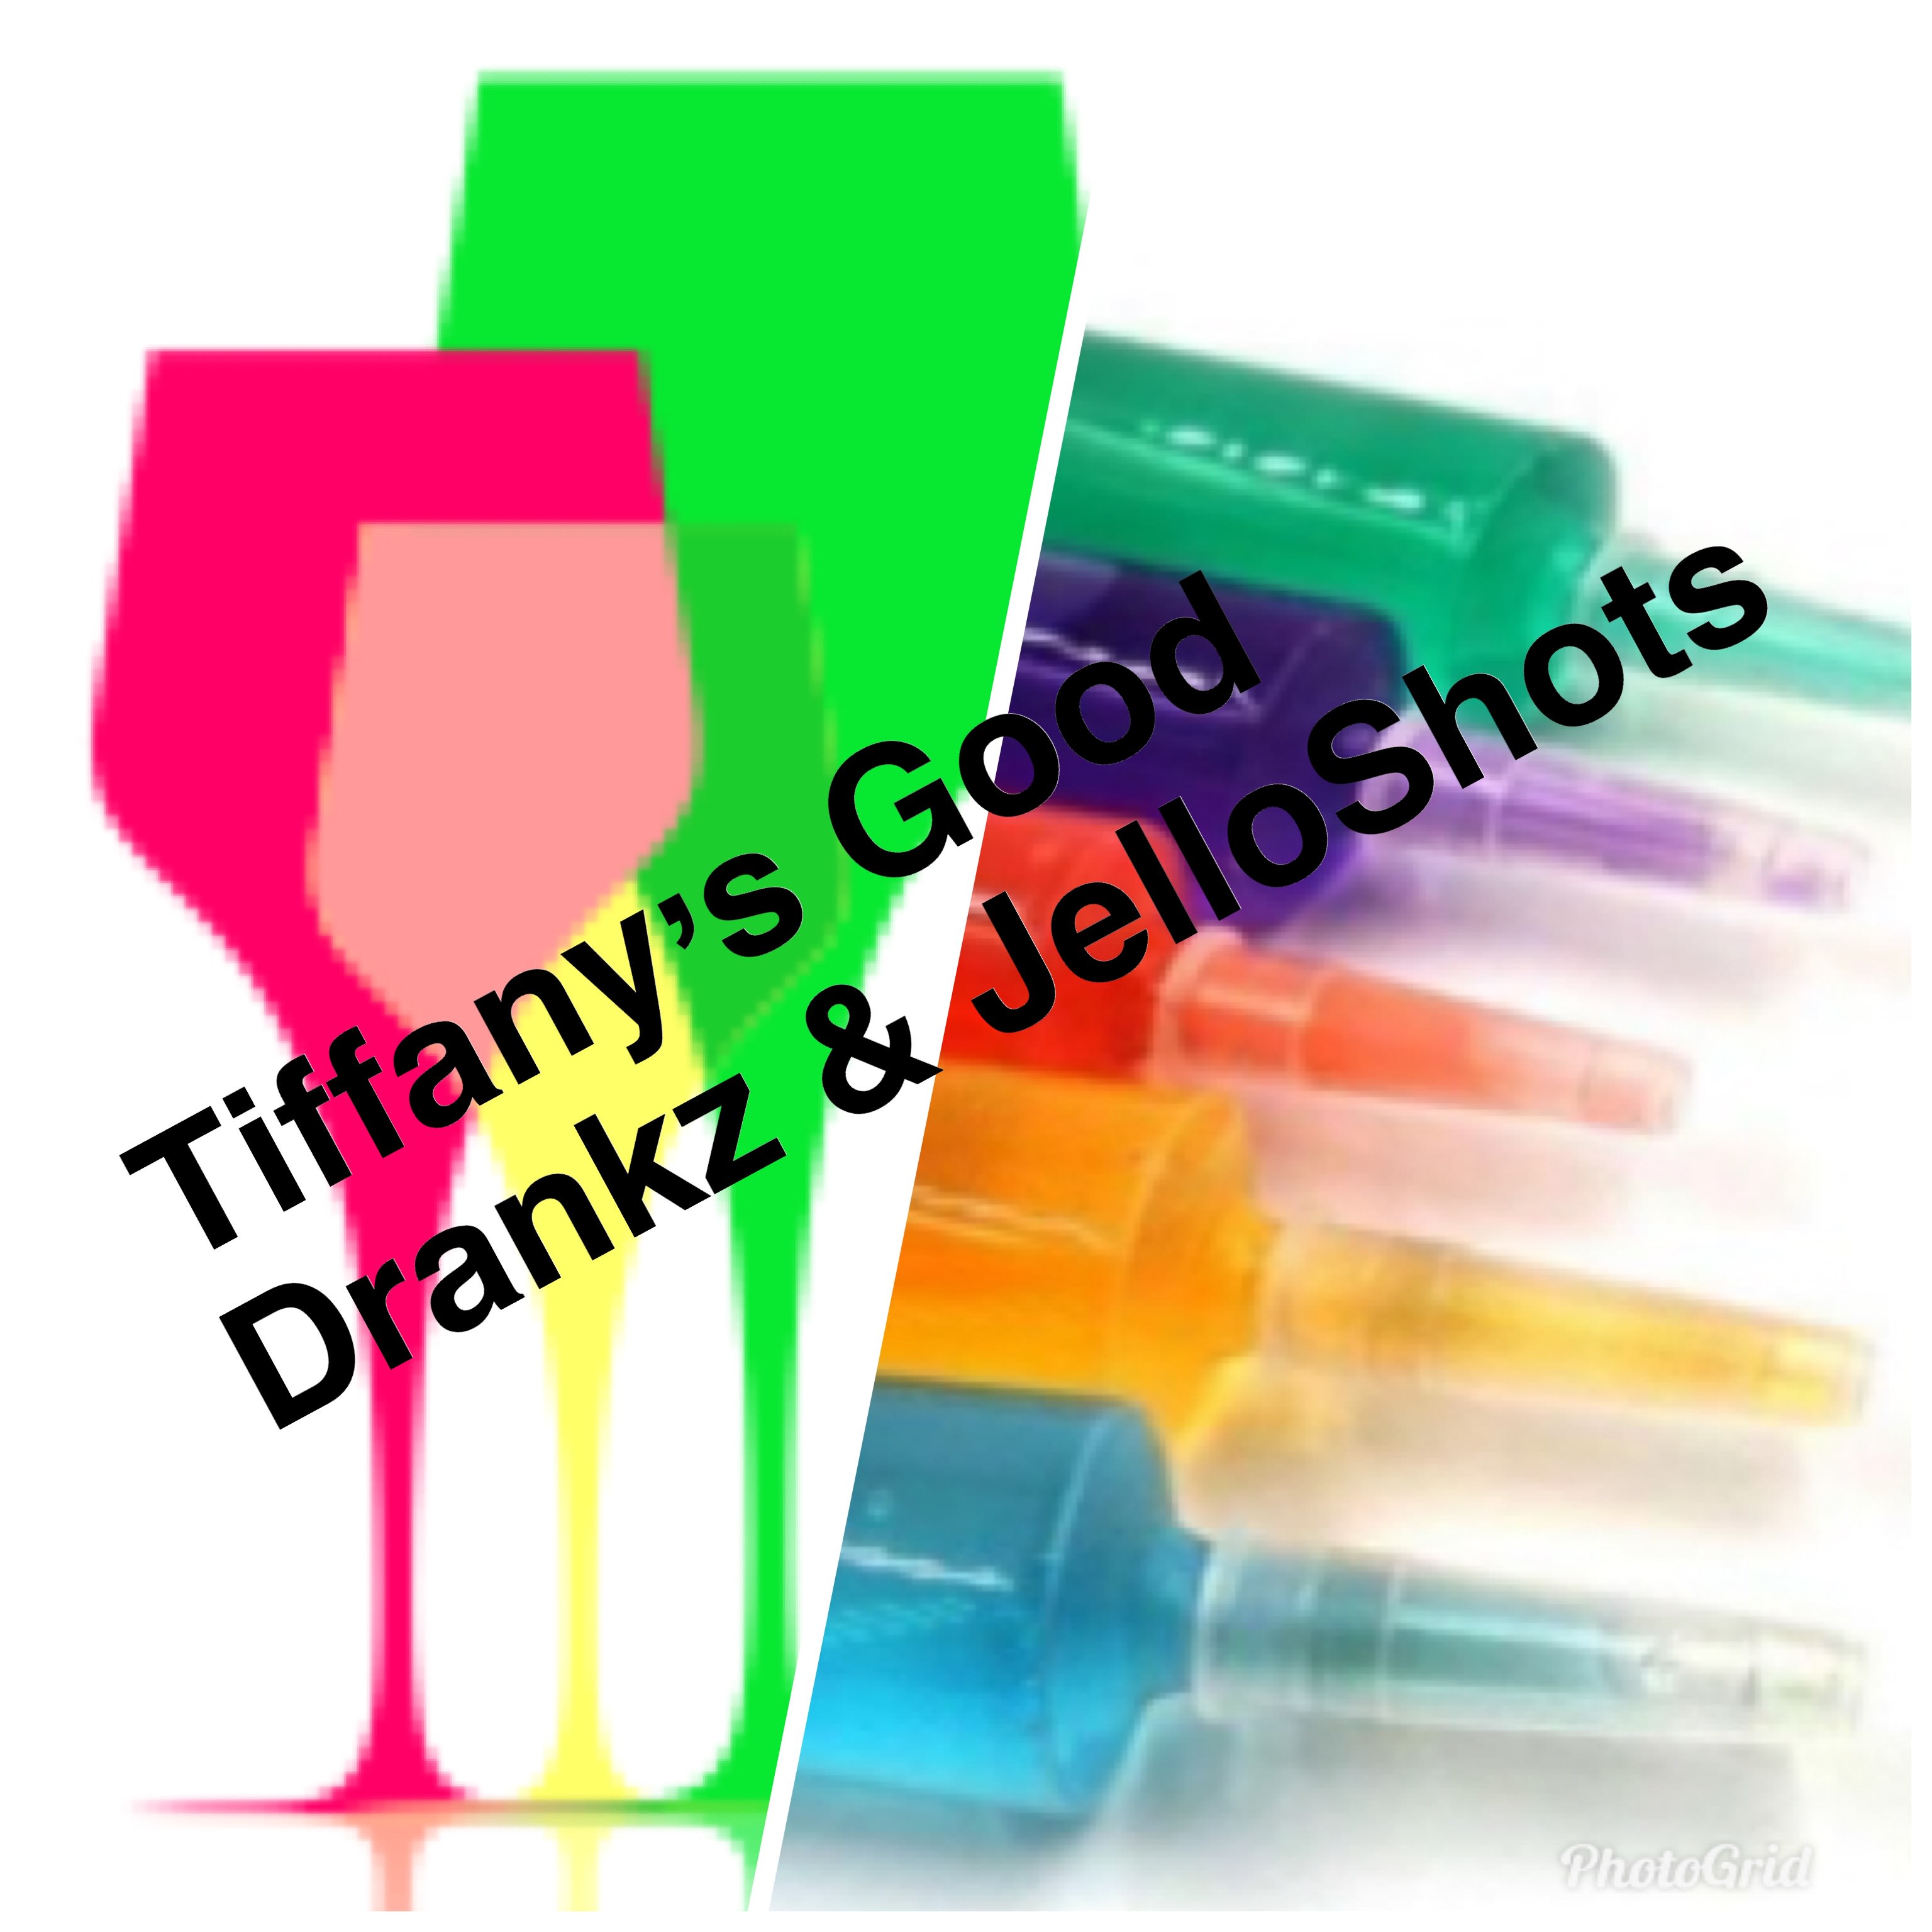 Tiffany’s Good Drankz